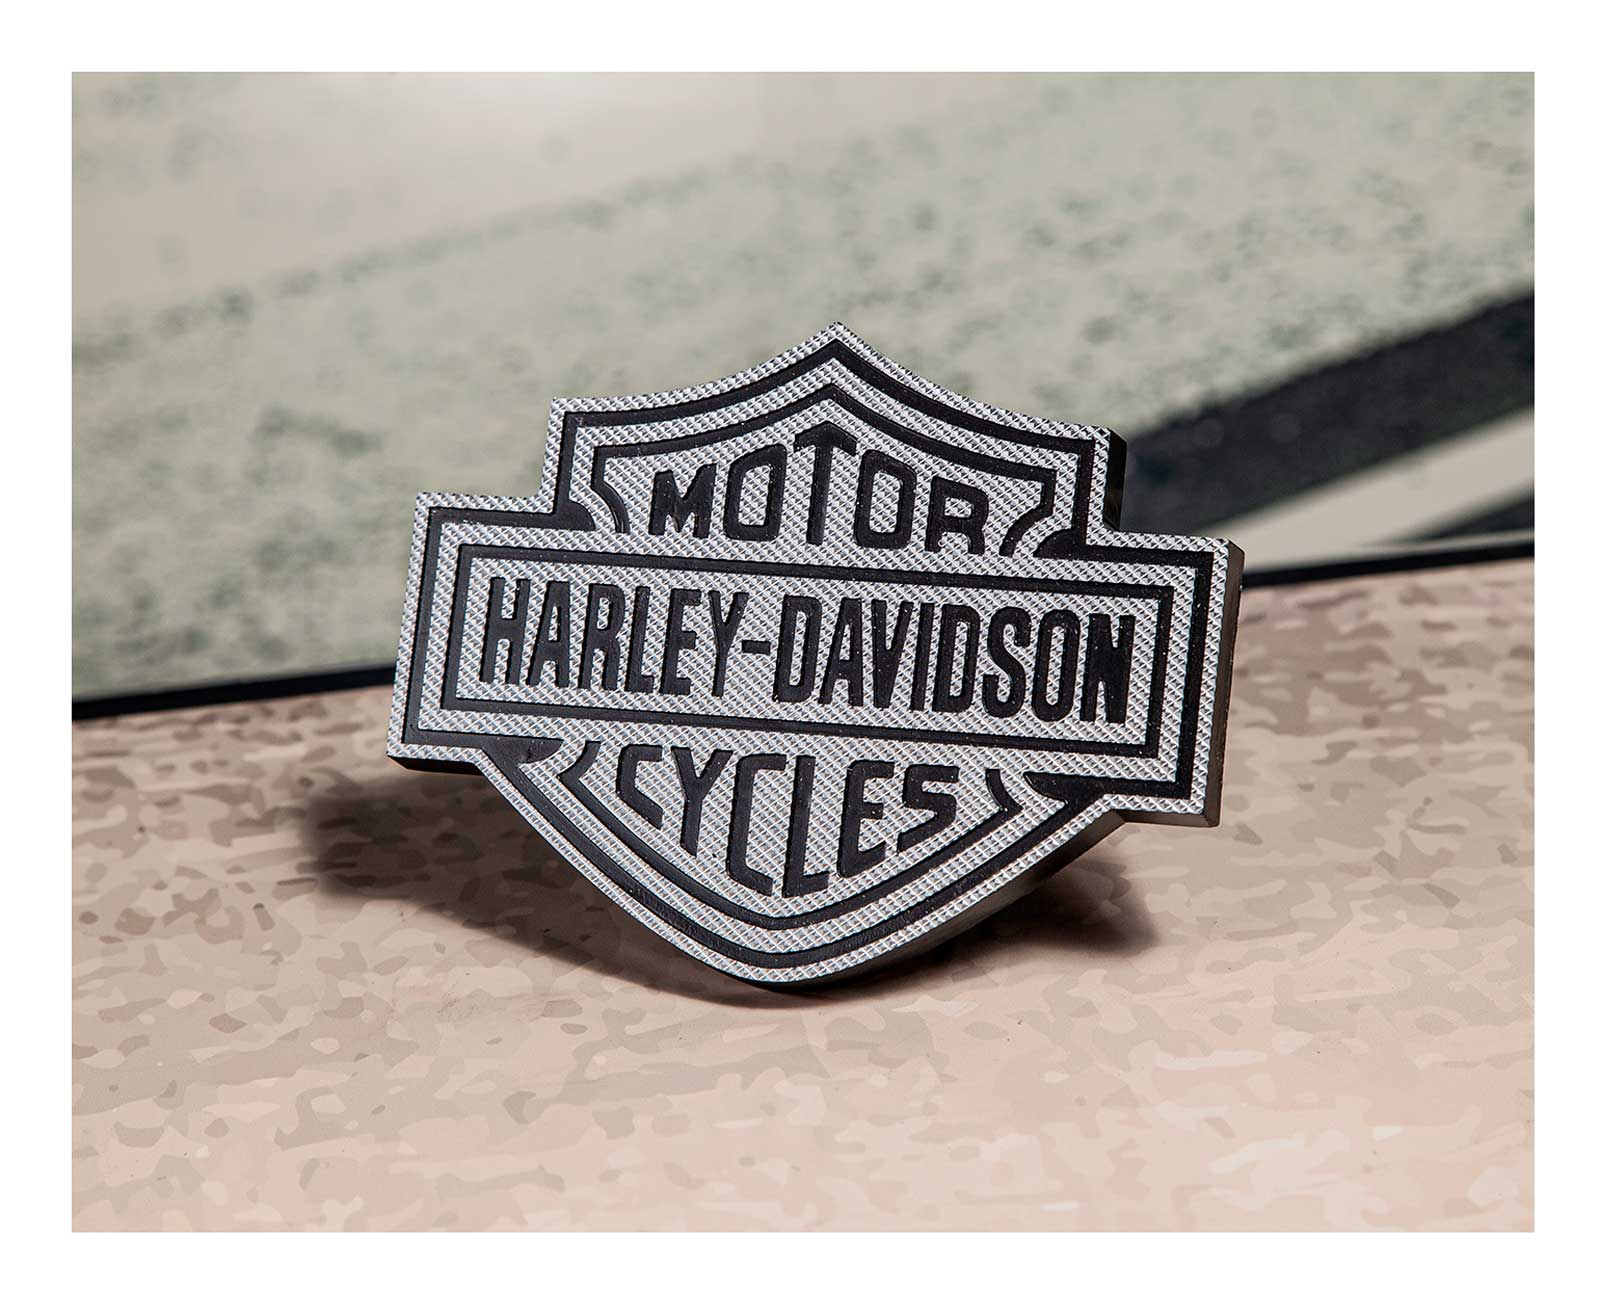 Harley-Davidson Diamond Head Patch